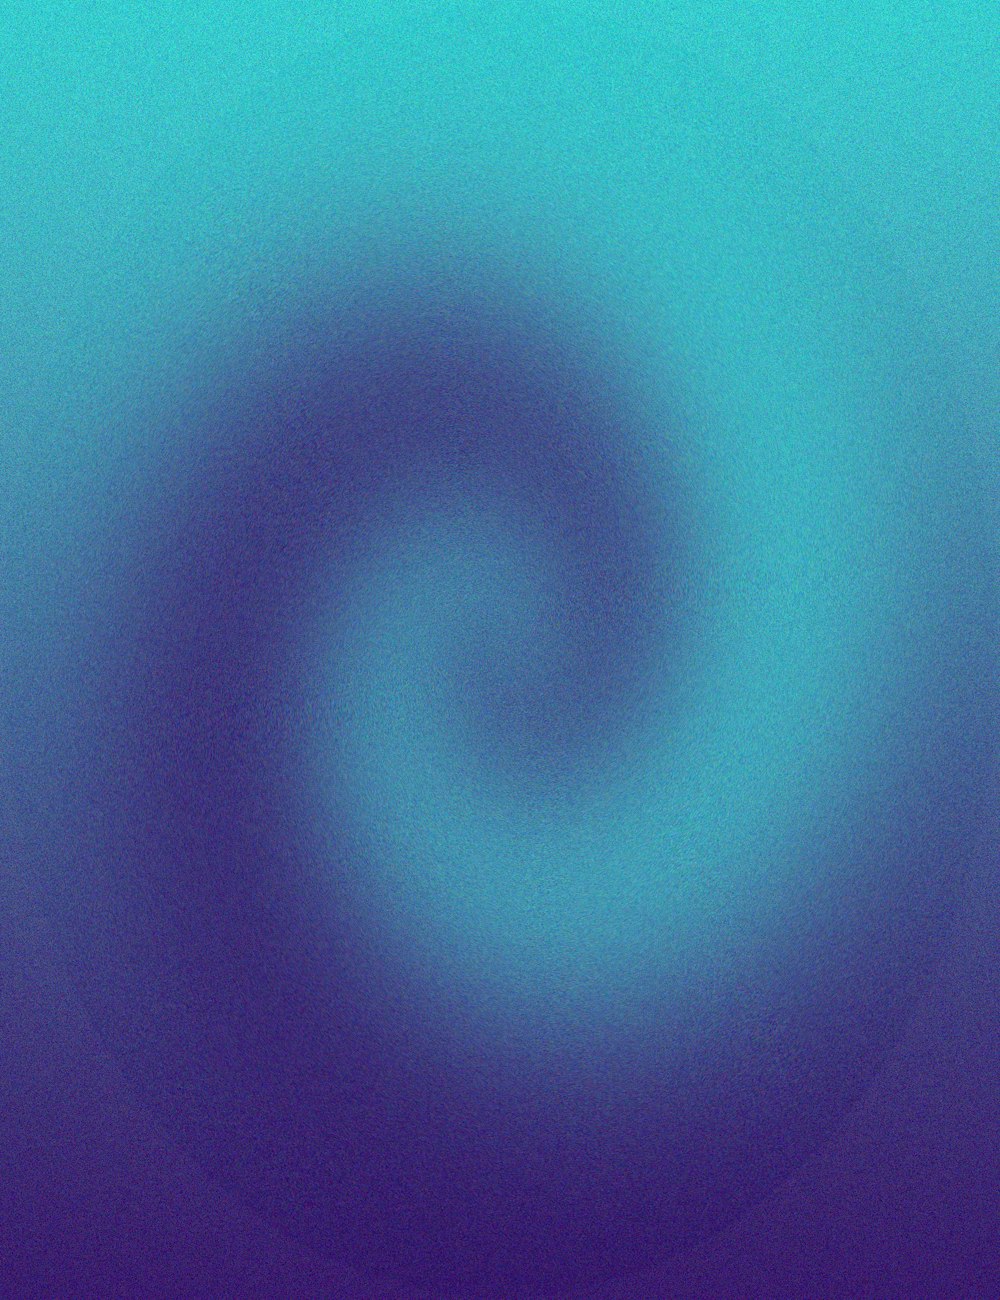 a blurry image of a blue spiral